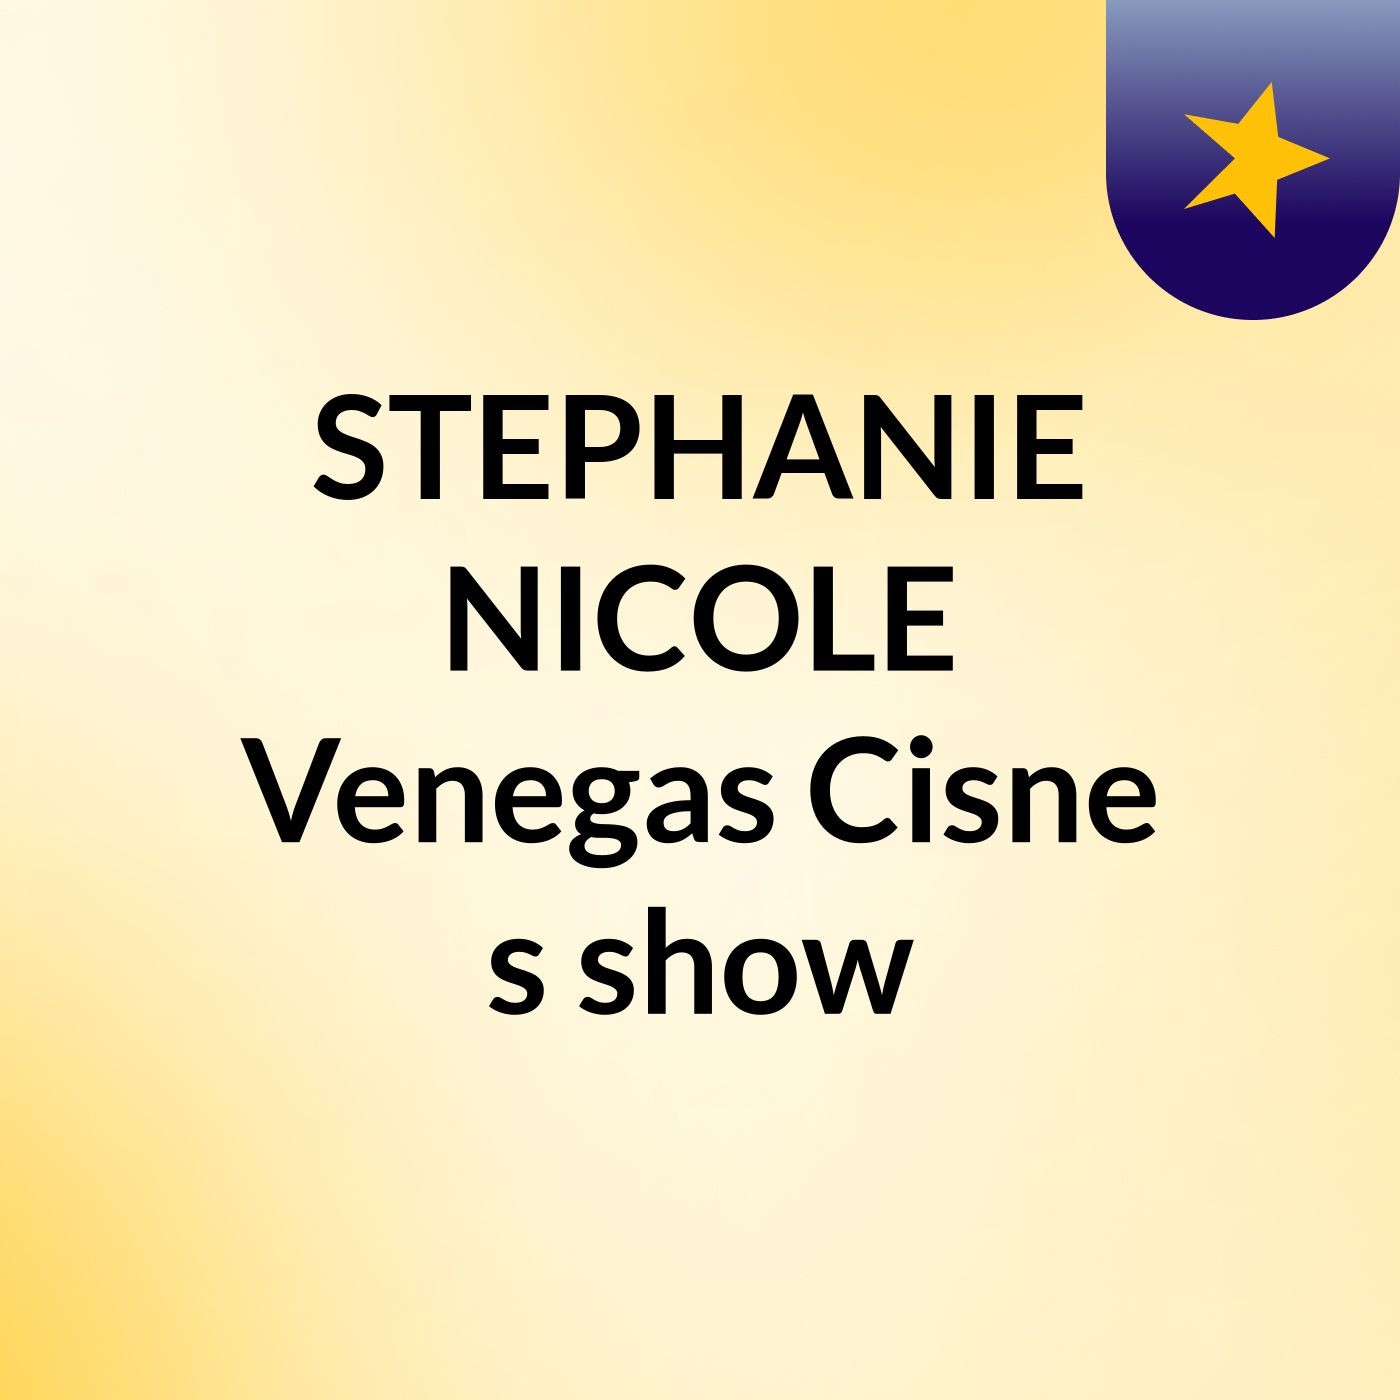 STEPHANIE NICOLE Venegas Cisne's show